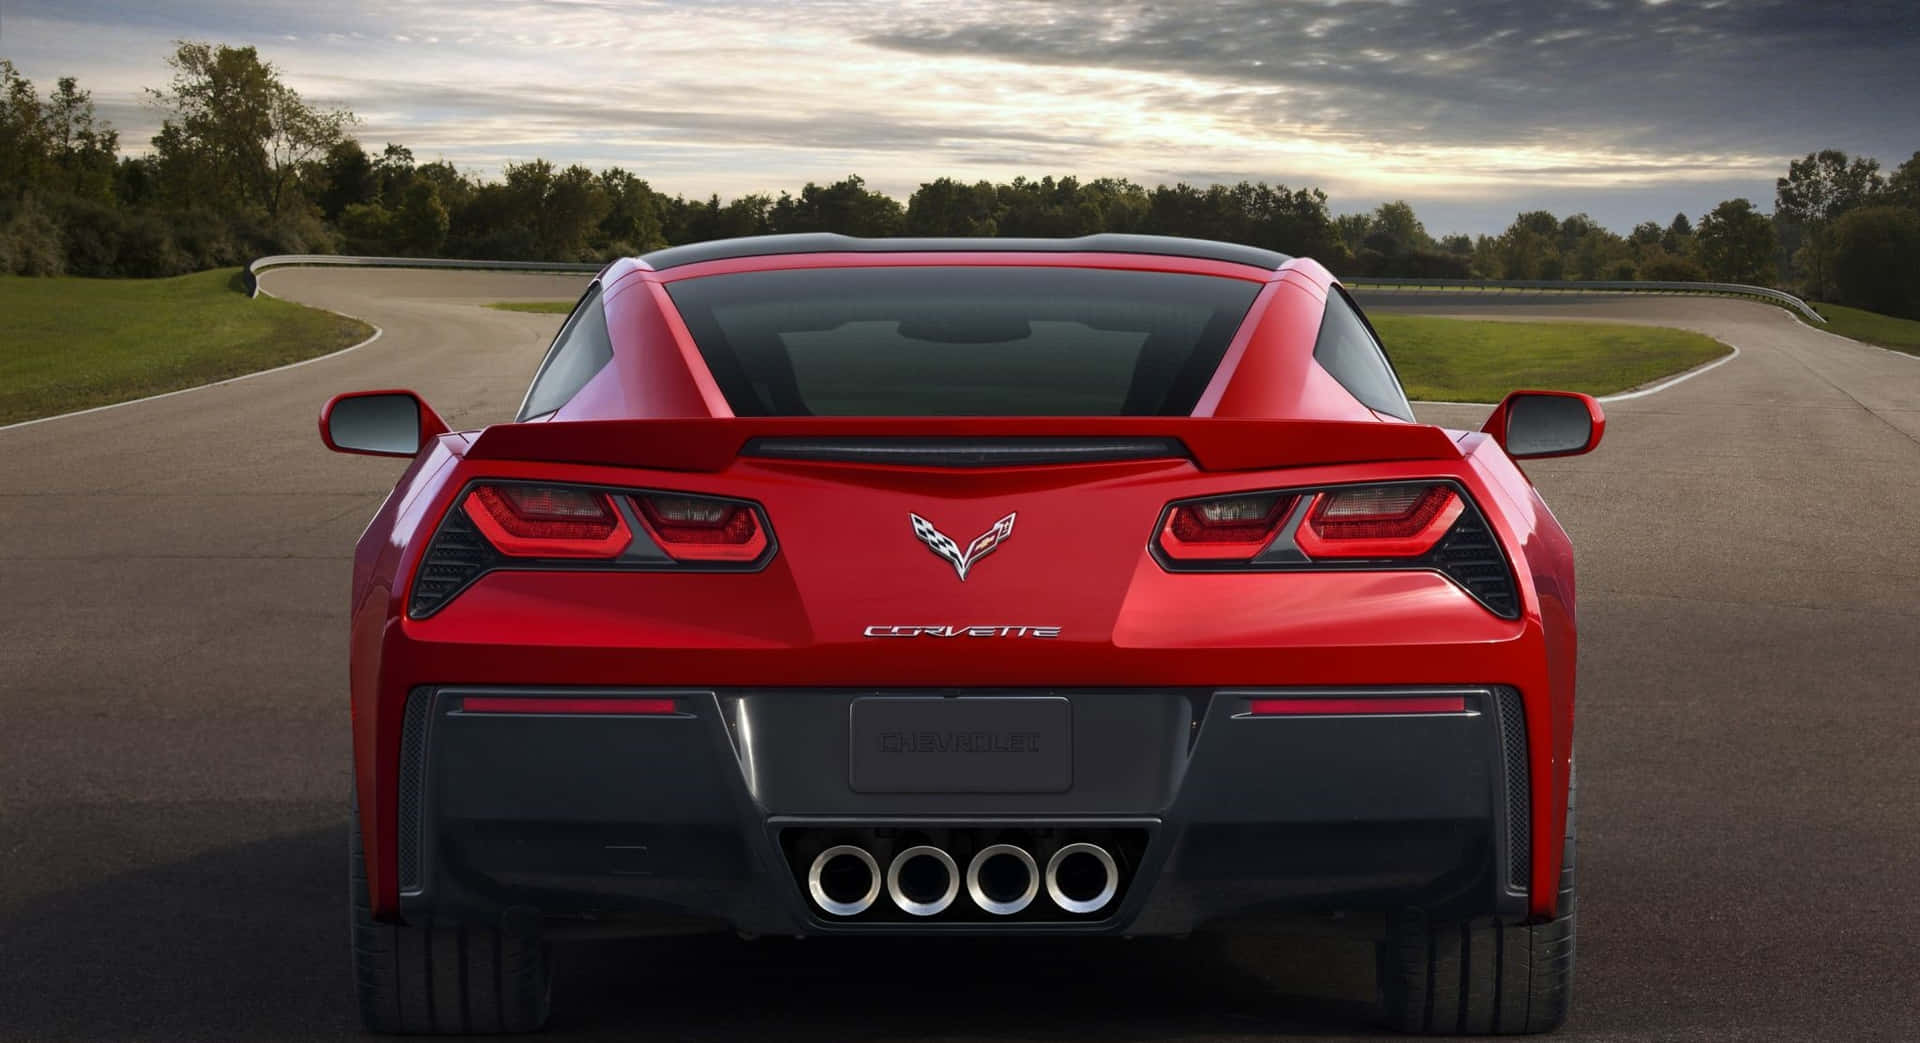 Unimpresionante Chevrolet Corvette Stingray En La Carretera Abierta. Fondo de pantalla